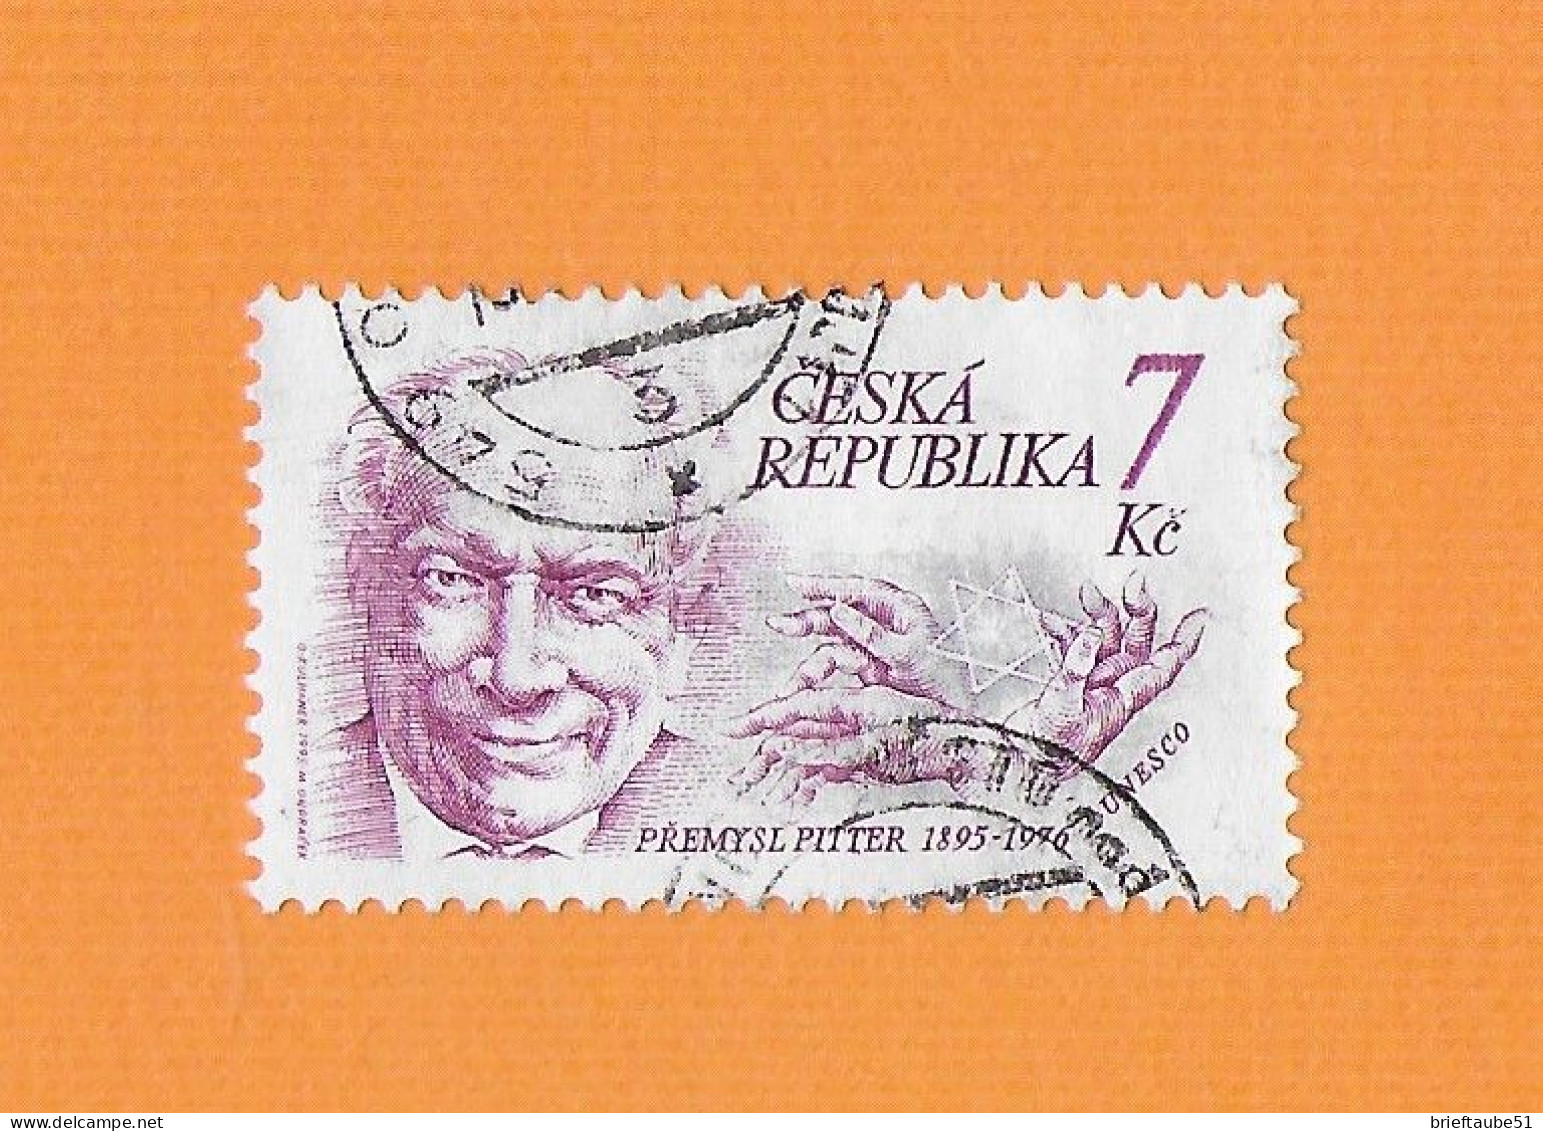 CZECH REPUBLIC 1995 Gestempelt°Used/Bedarf   MiNr. 66  #  Premsyl Pitter  #  Philosoph - Used Stamps